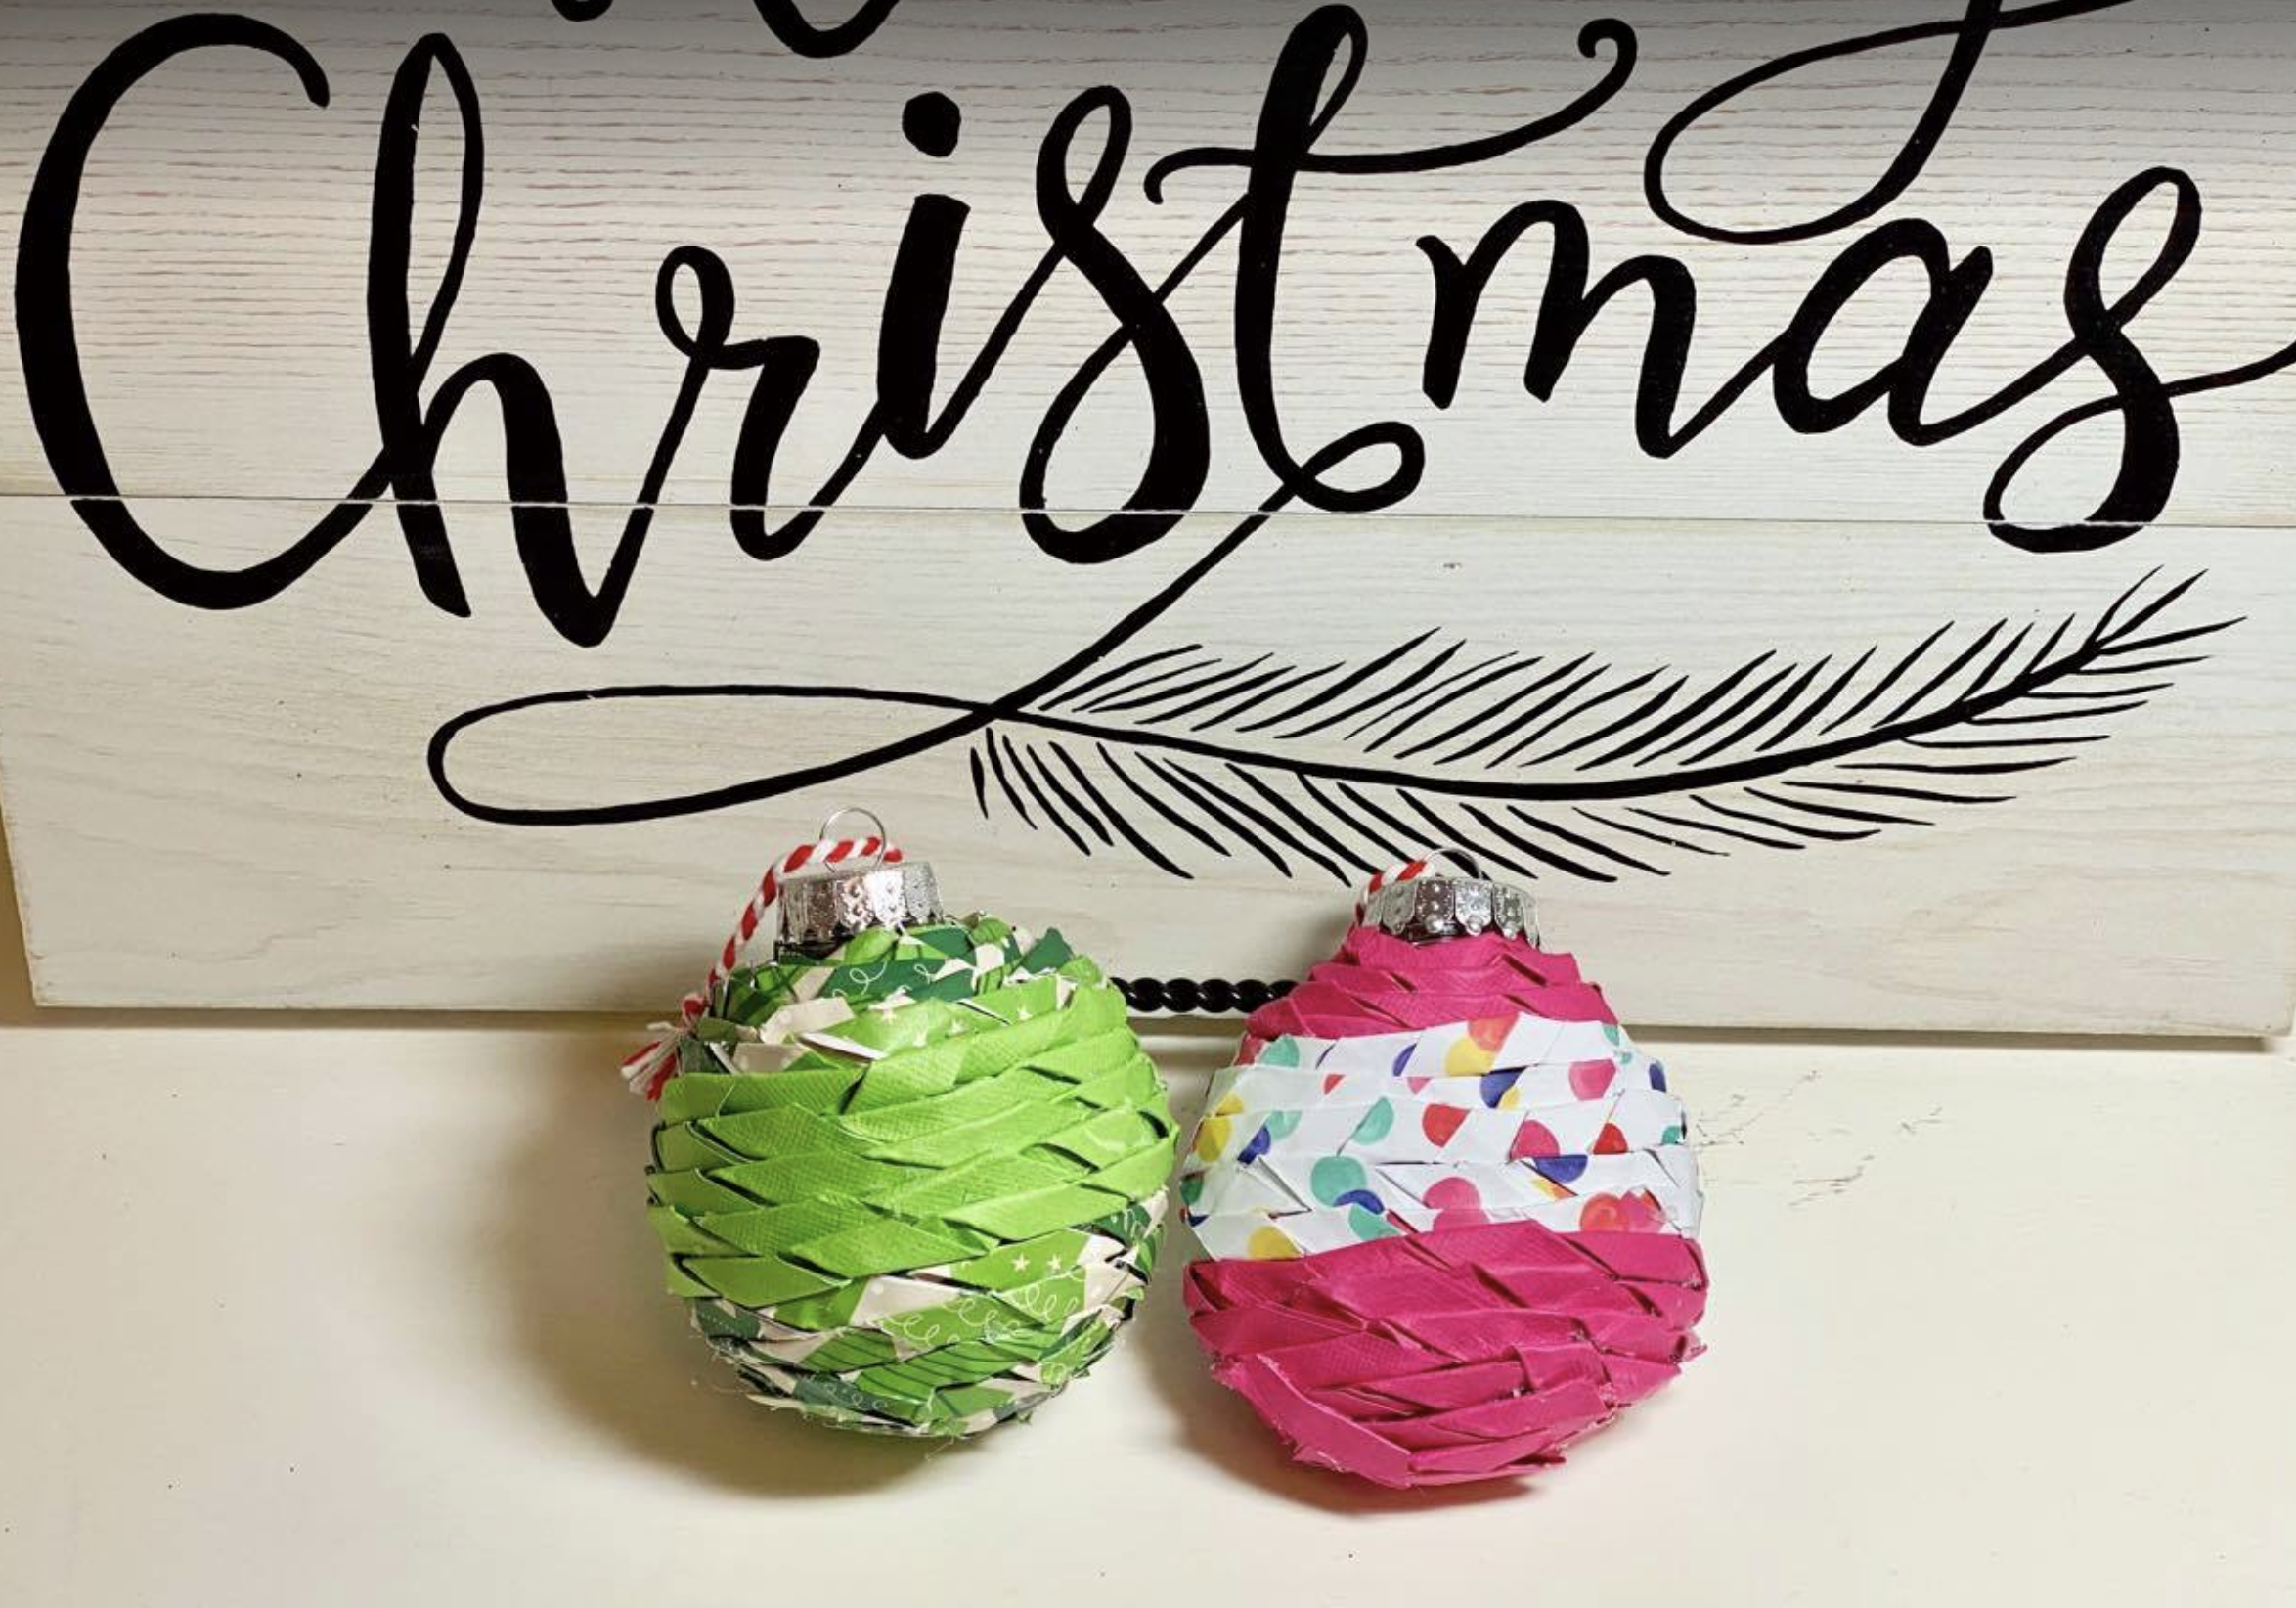 handmade holiday ornaments